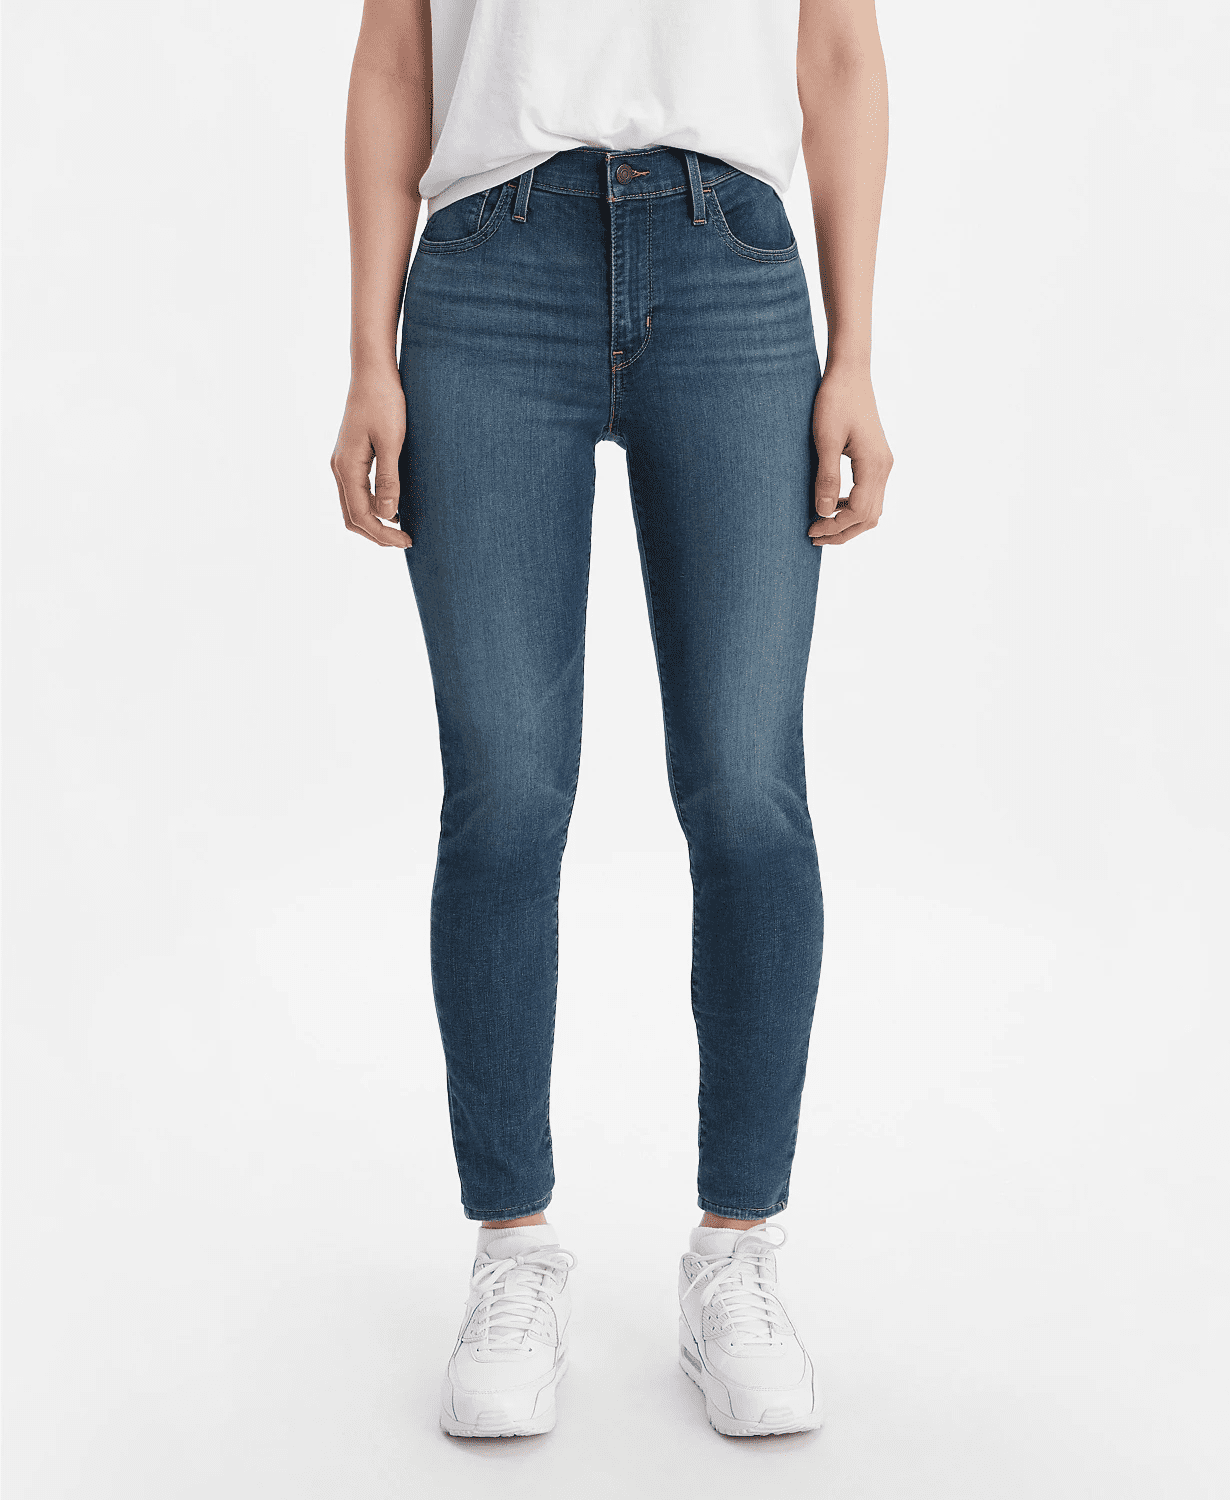 Or Opiate Fraction Levi's QUEBEC AUTUMN Women's 720 High Rise Skinny Jeans, 6M/W28 L30 -  Walmart.com